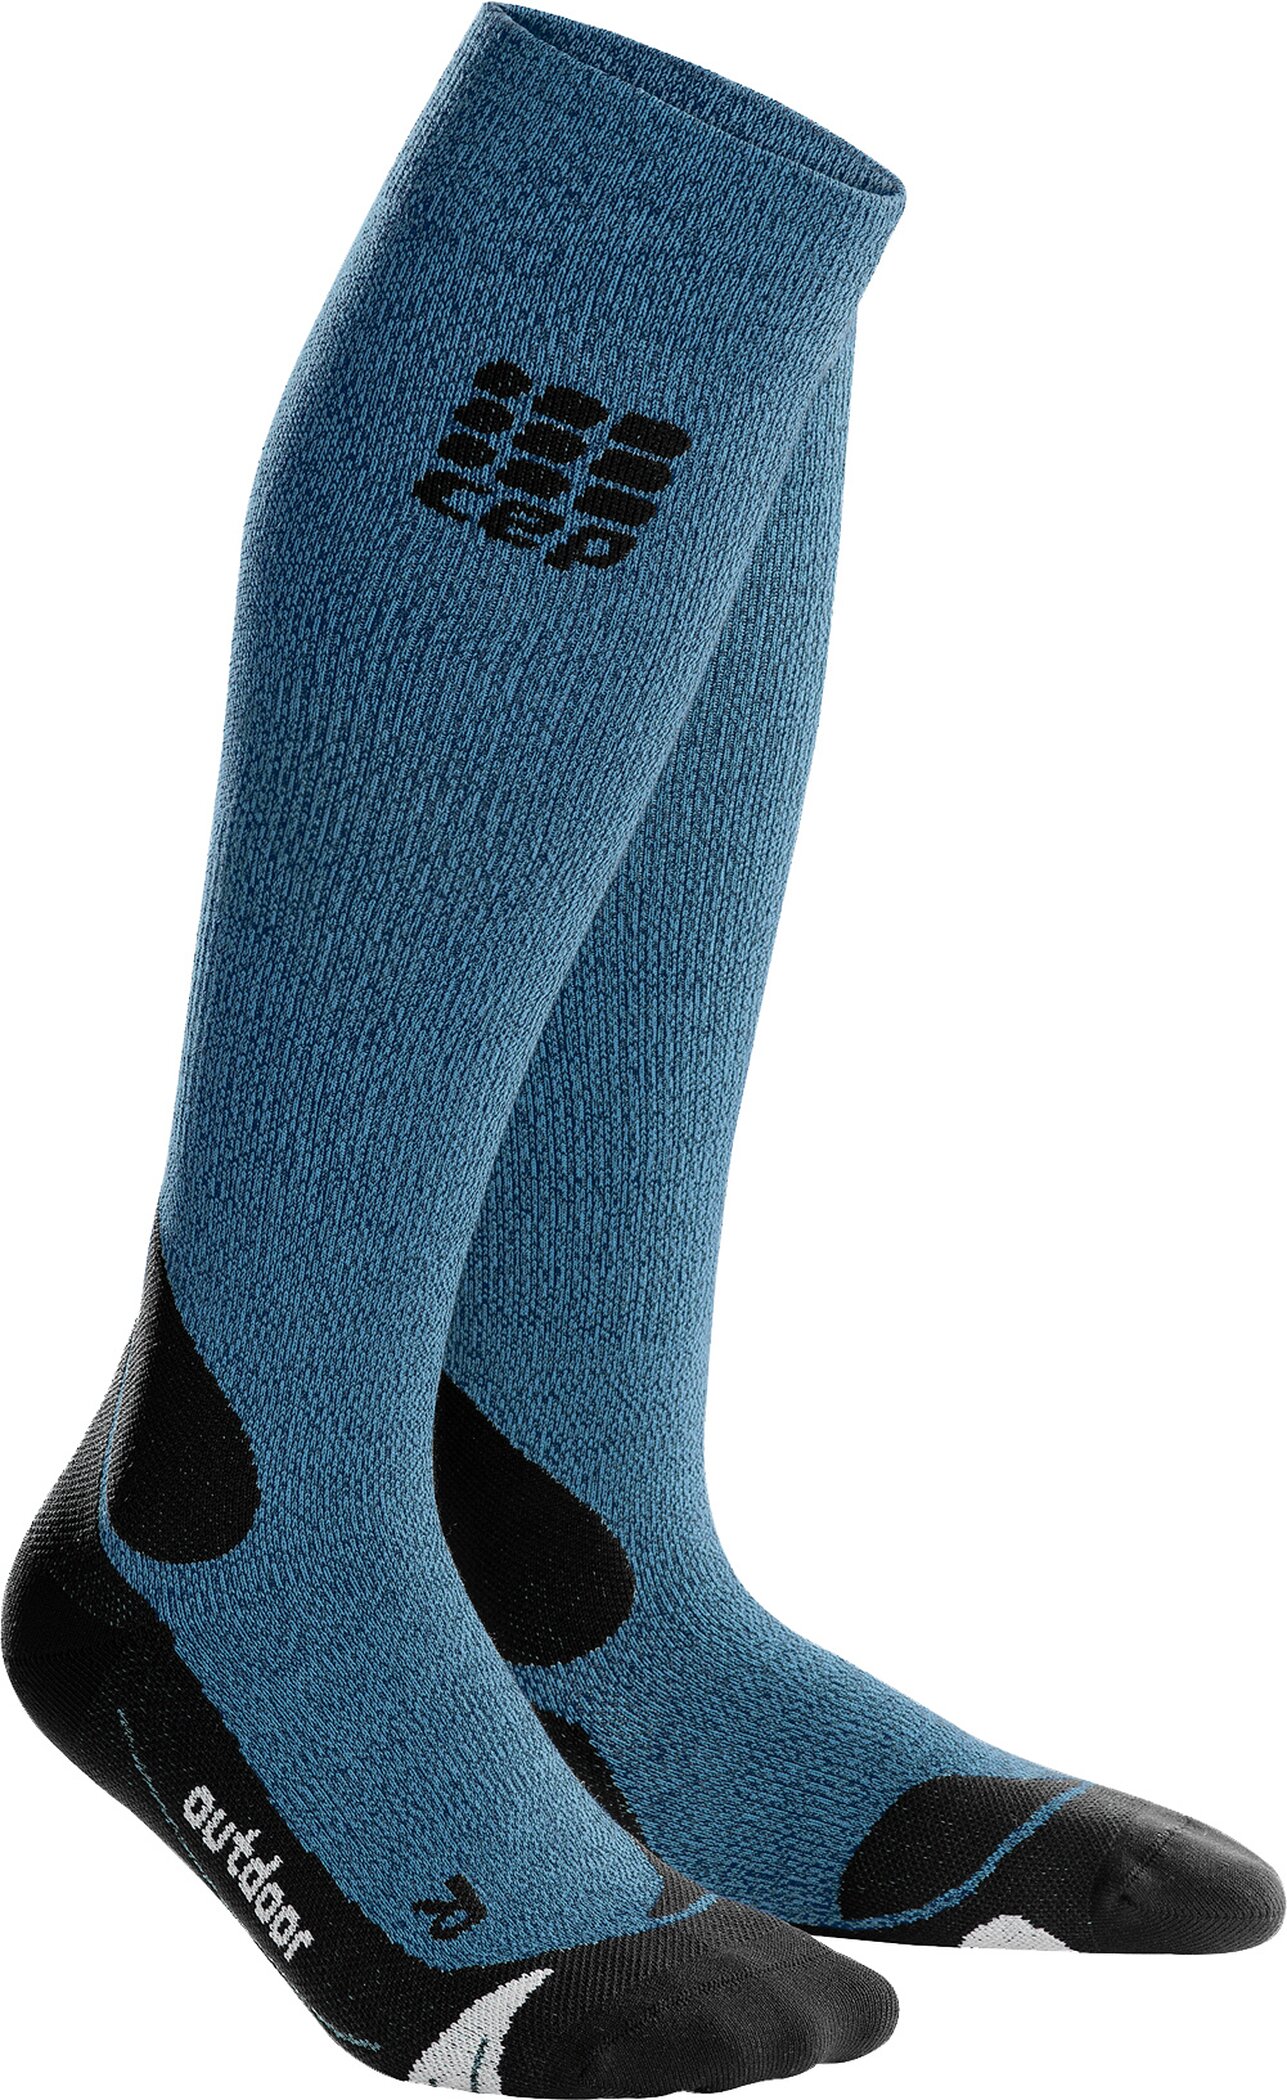 CEP Damen pro+ outdoor merino socks